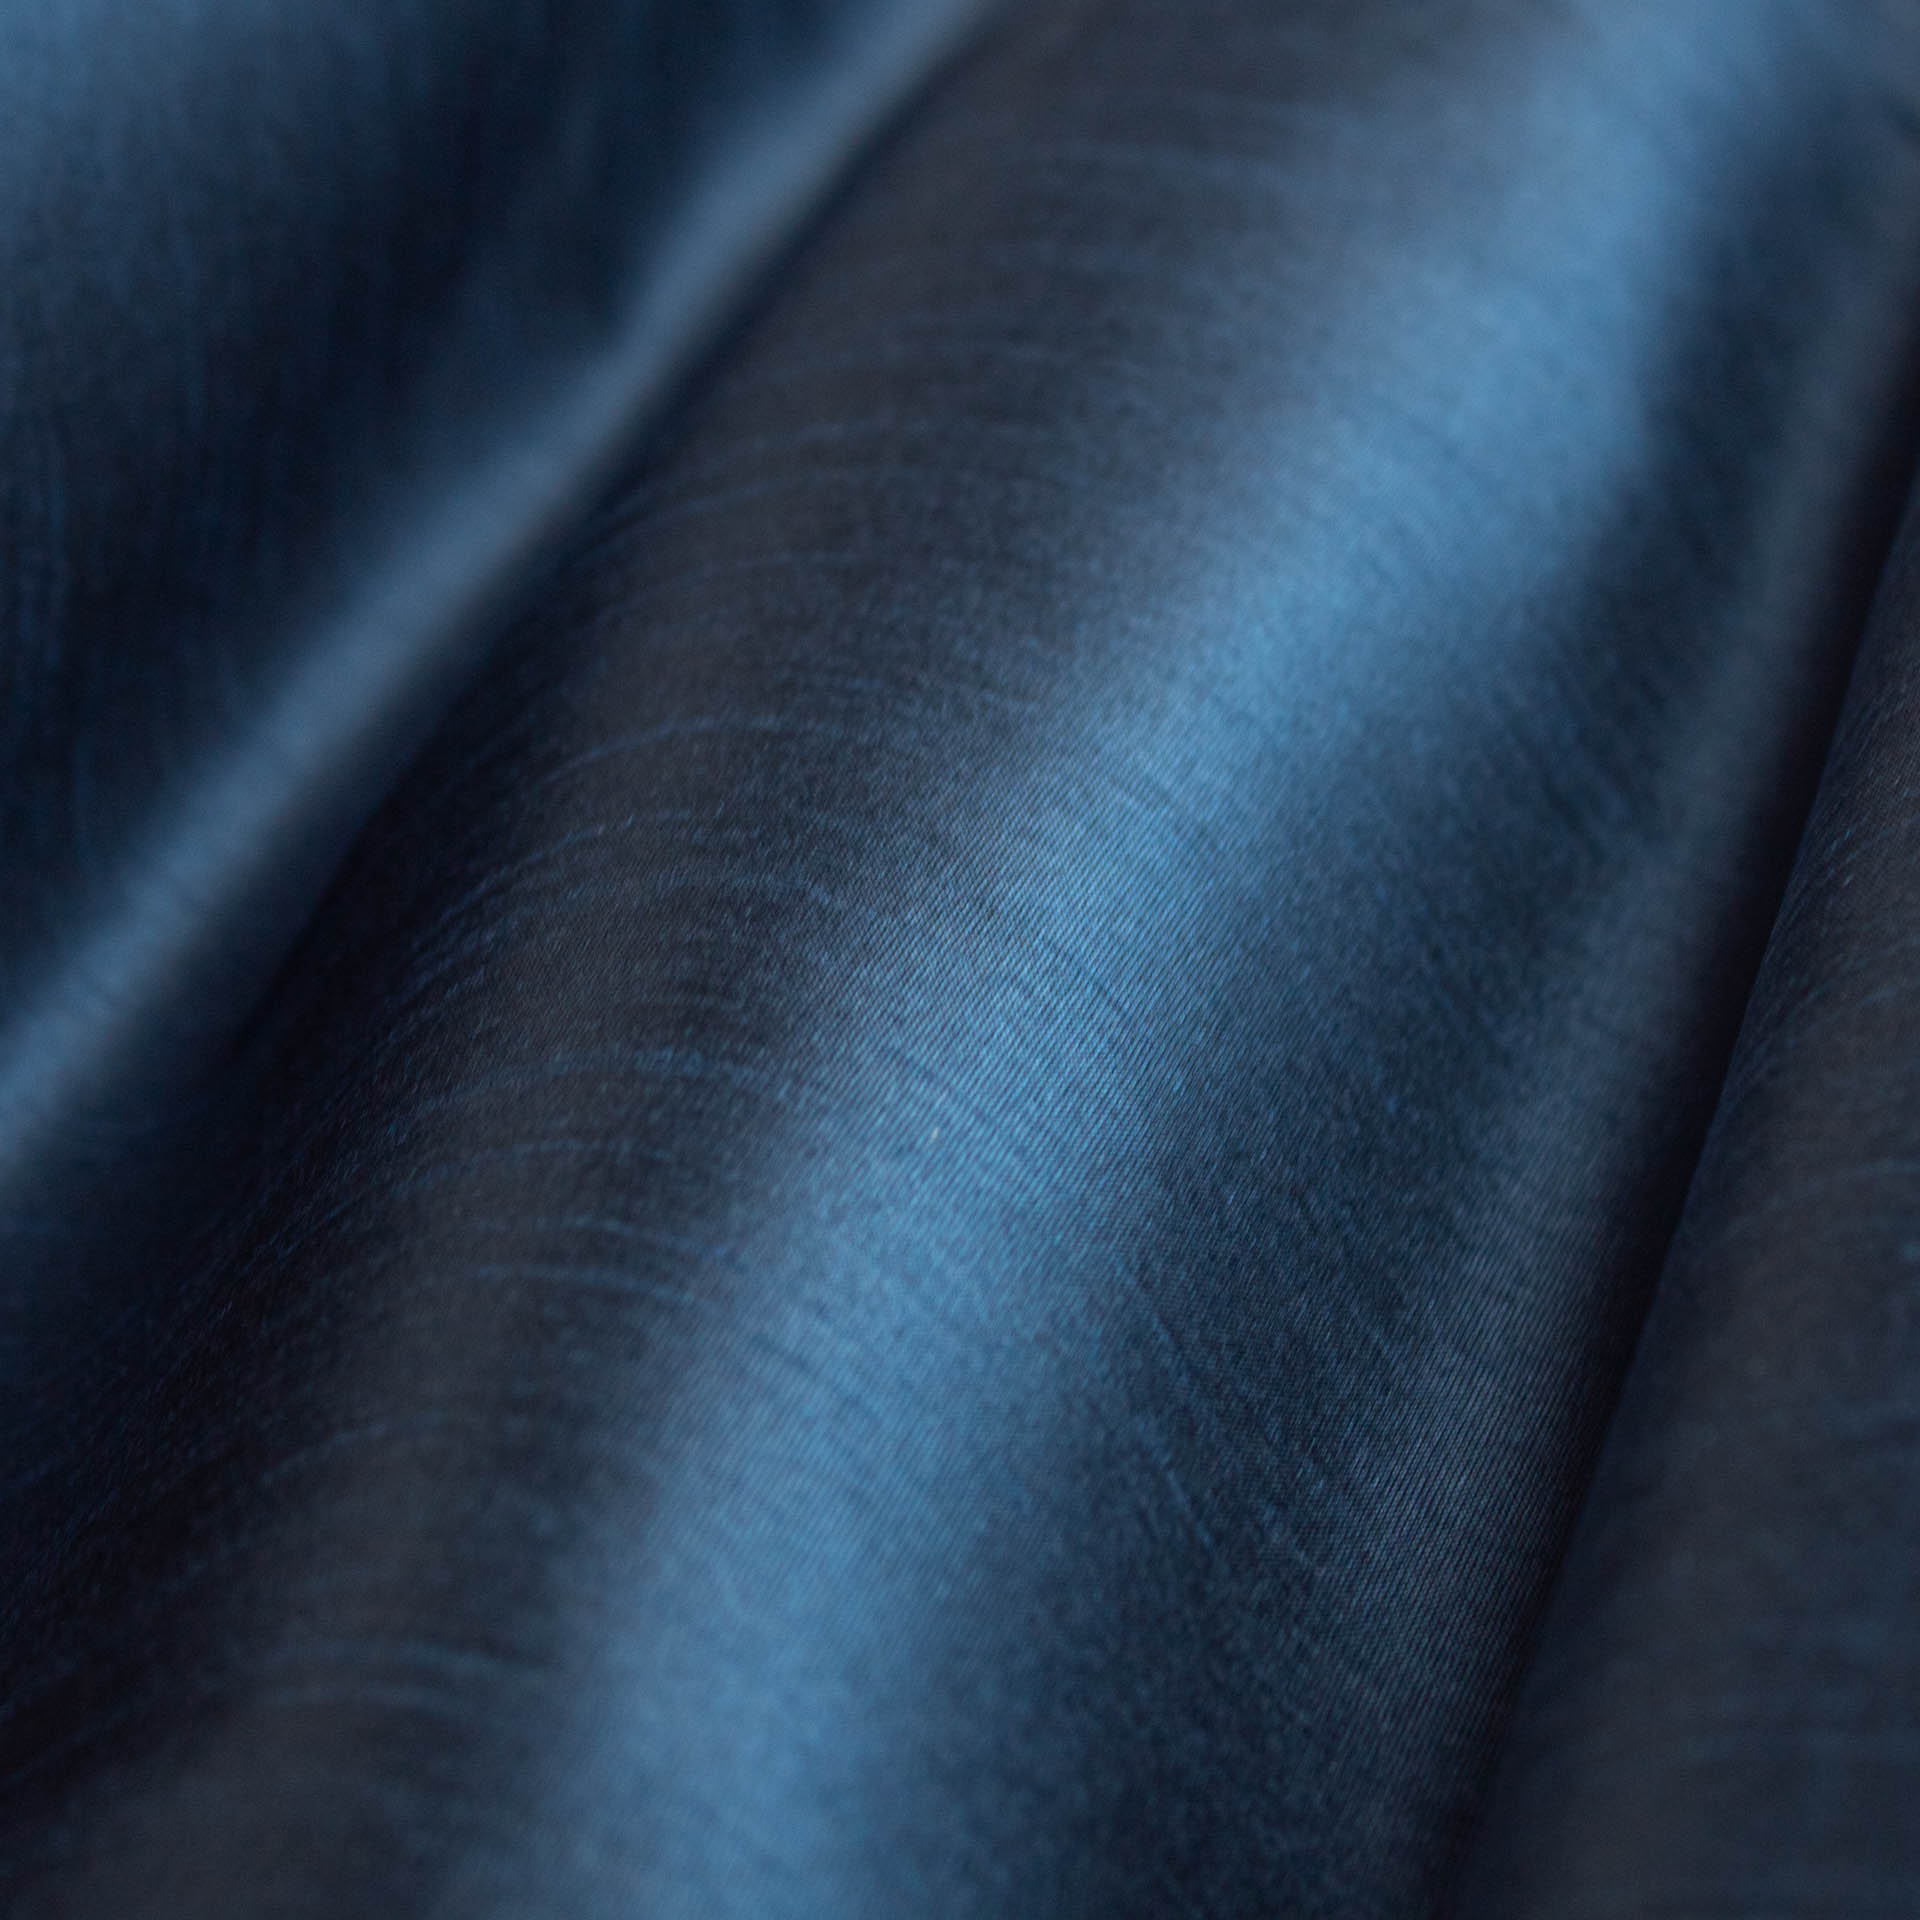 RM COCO  Maasai / Indigo - Chenille, Woven/Jacquard Fabric